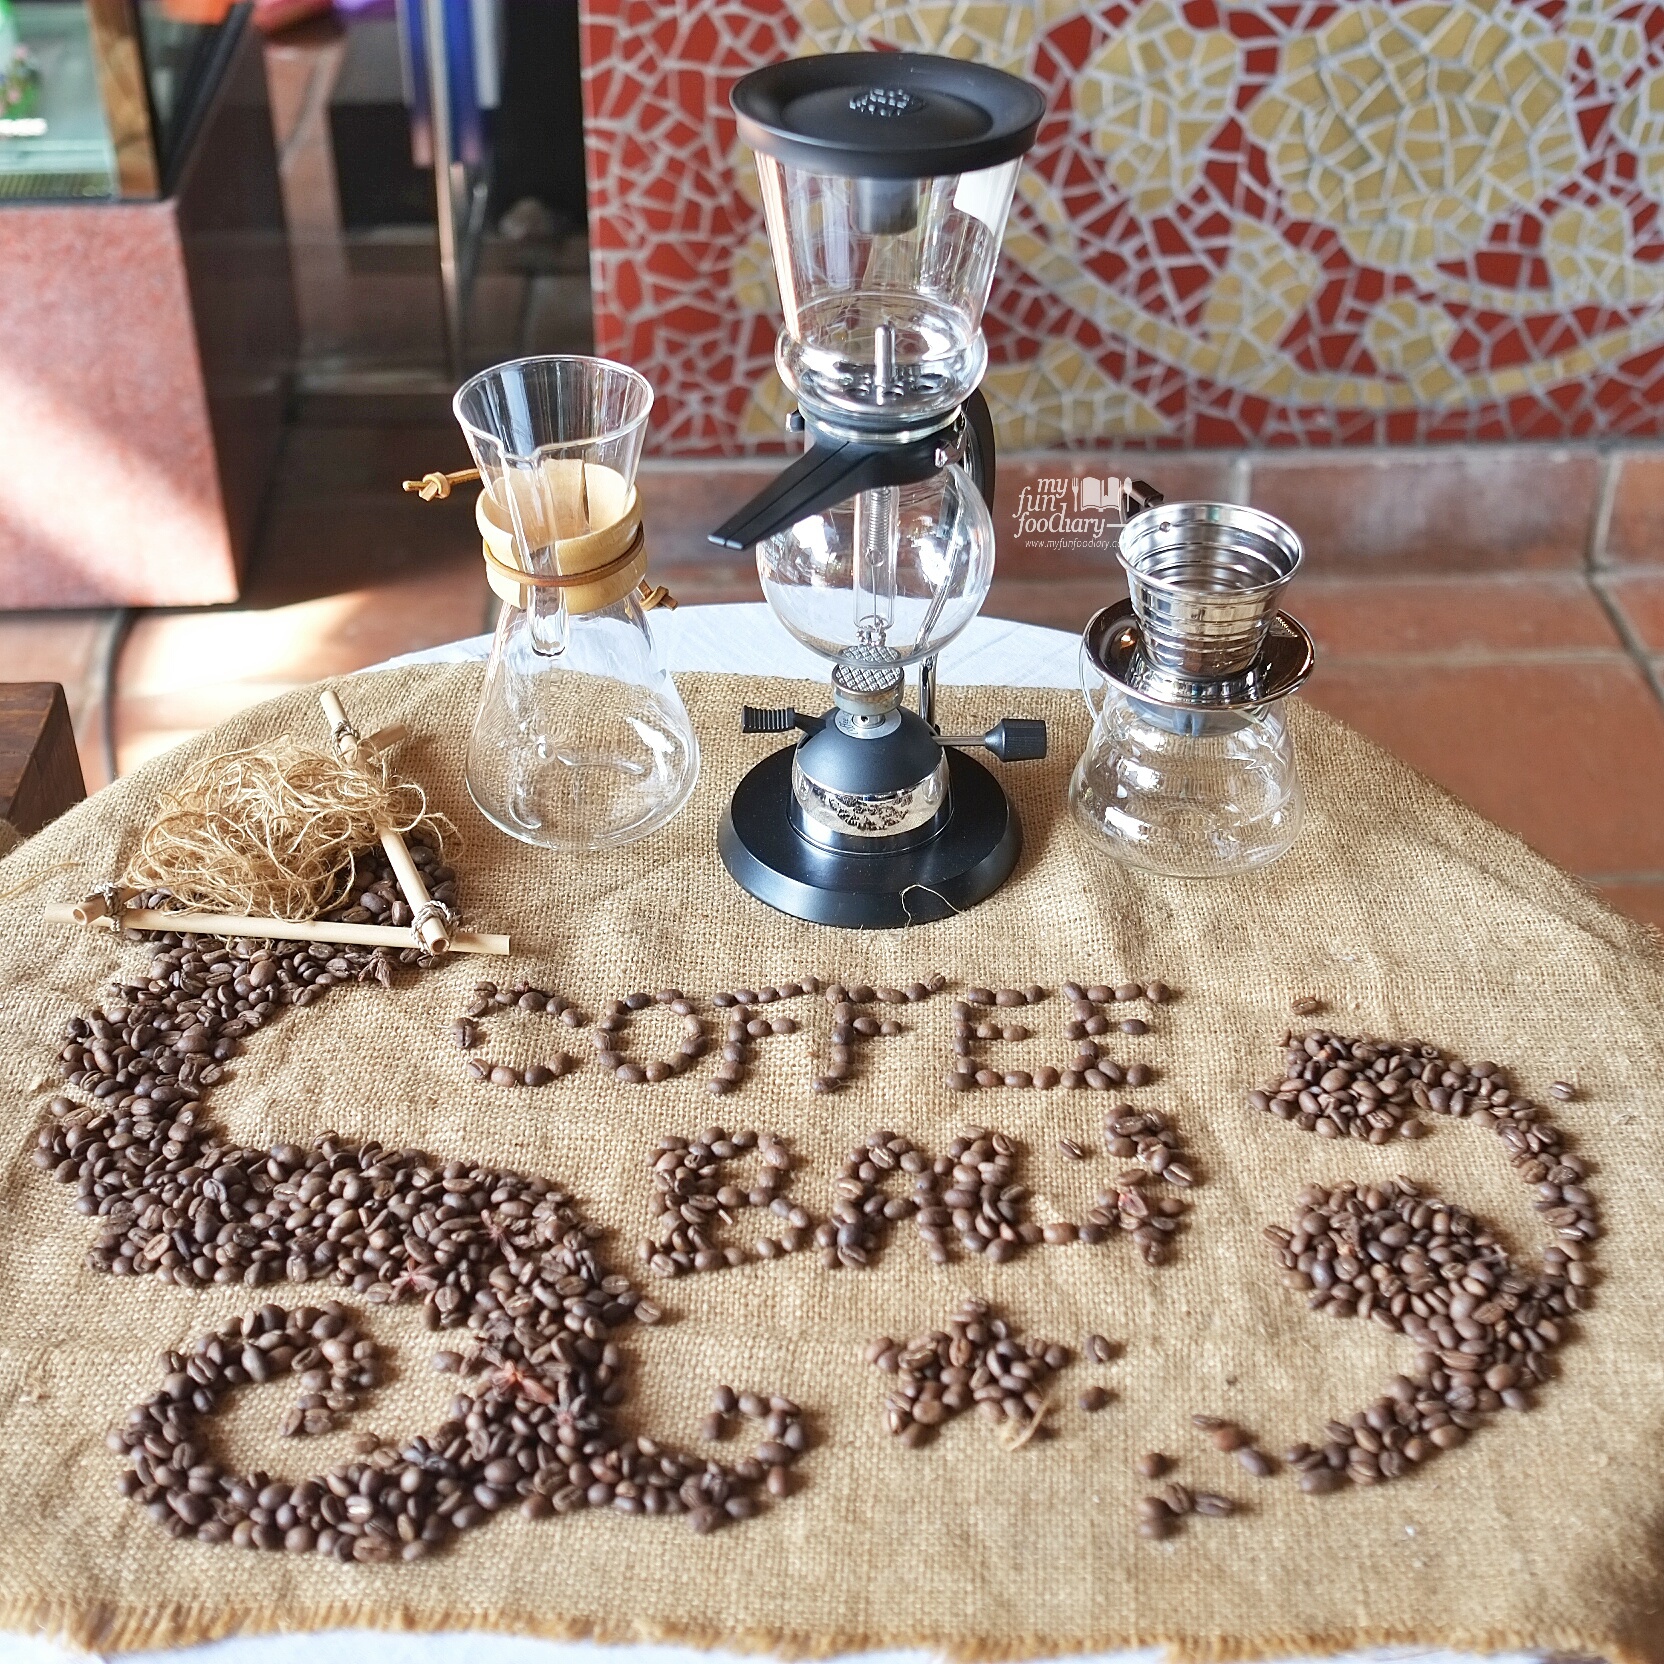 Manual Brewing Balinese Coffee at Petani Restaurant - Alaya Resort Ubud by Myfunfoodiary